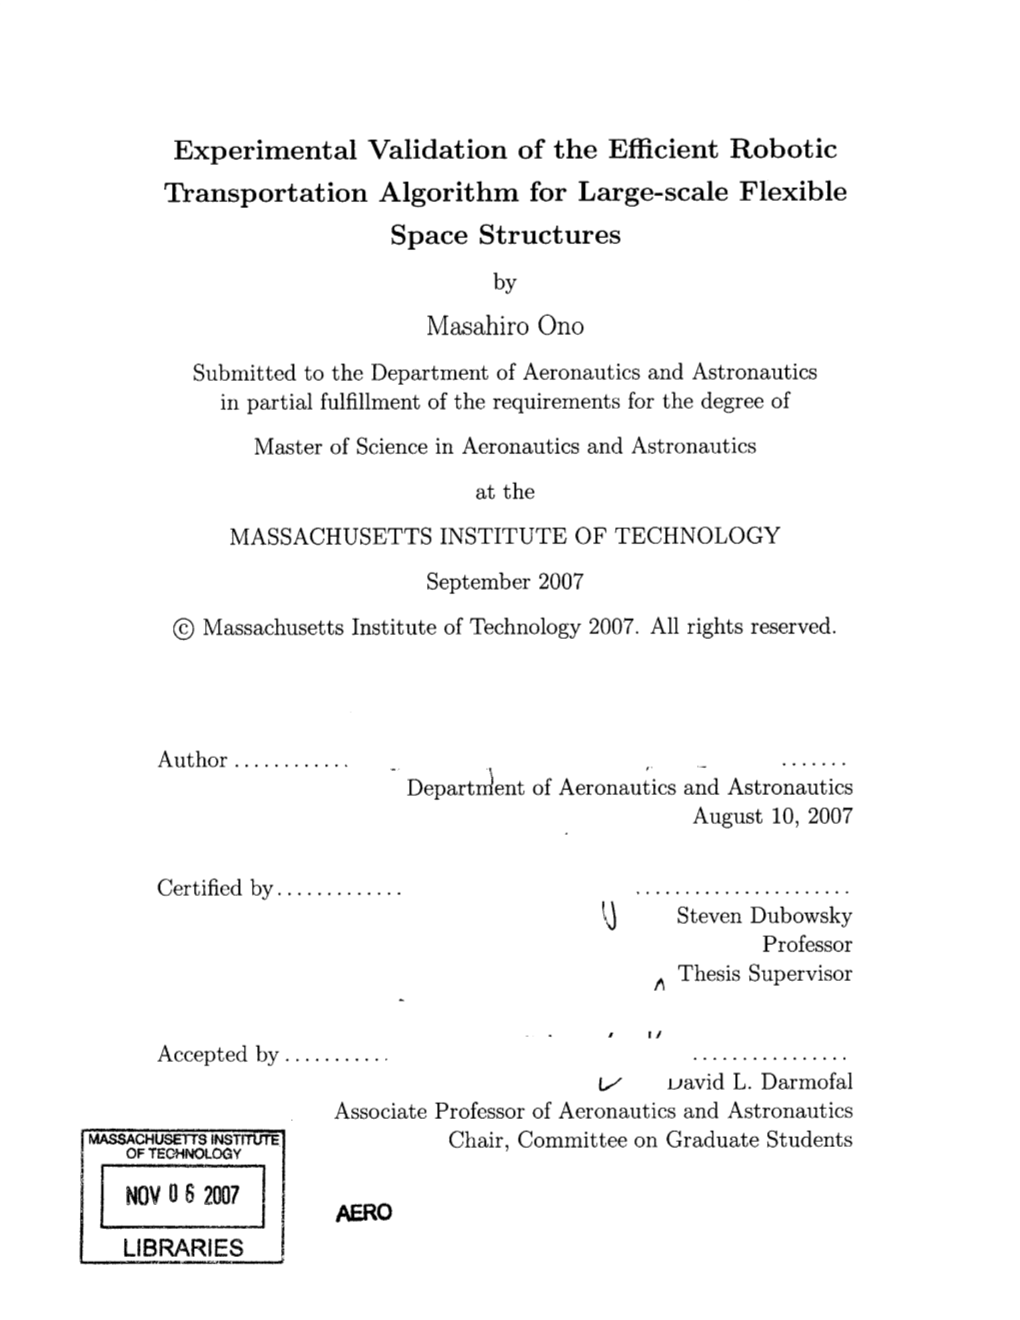 Experimental Validation of the Efficient Robotic Transportation Algorithm